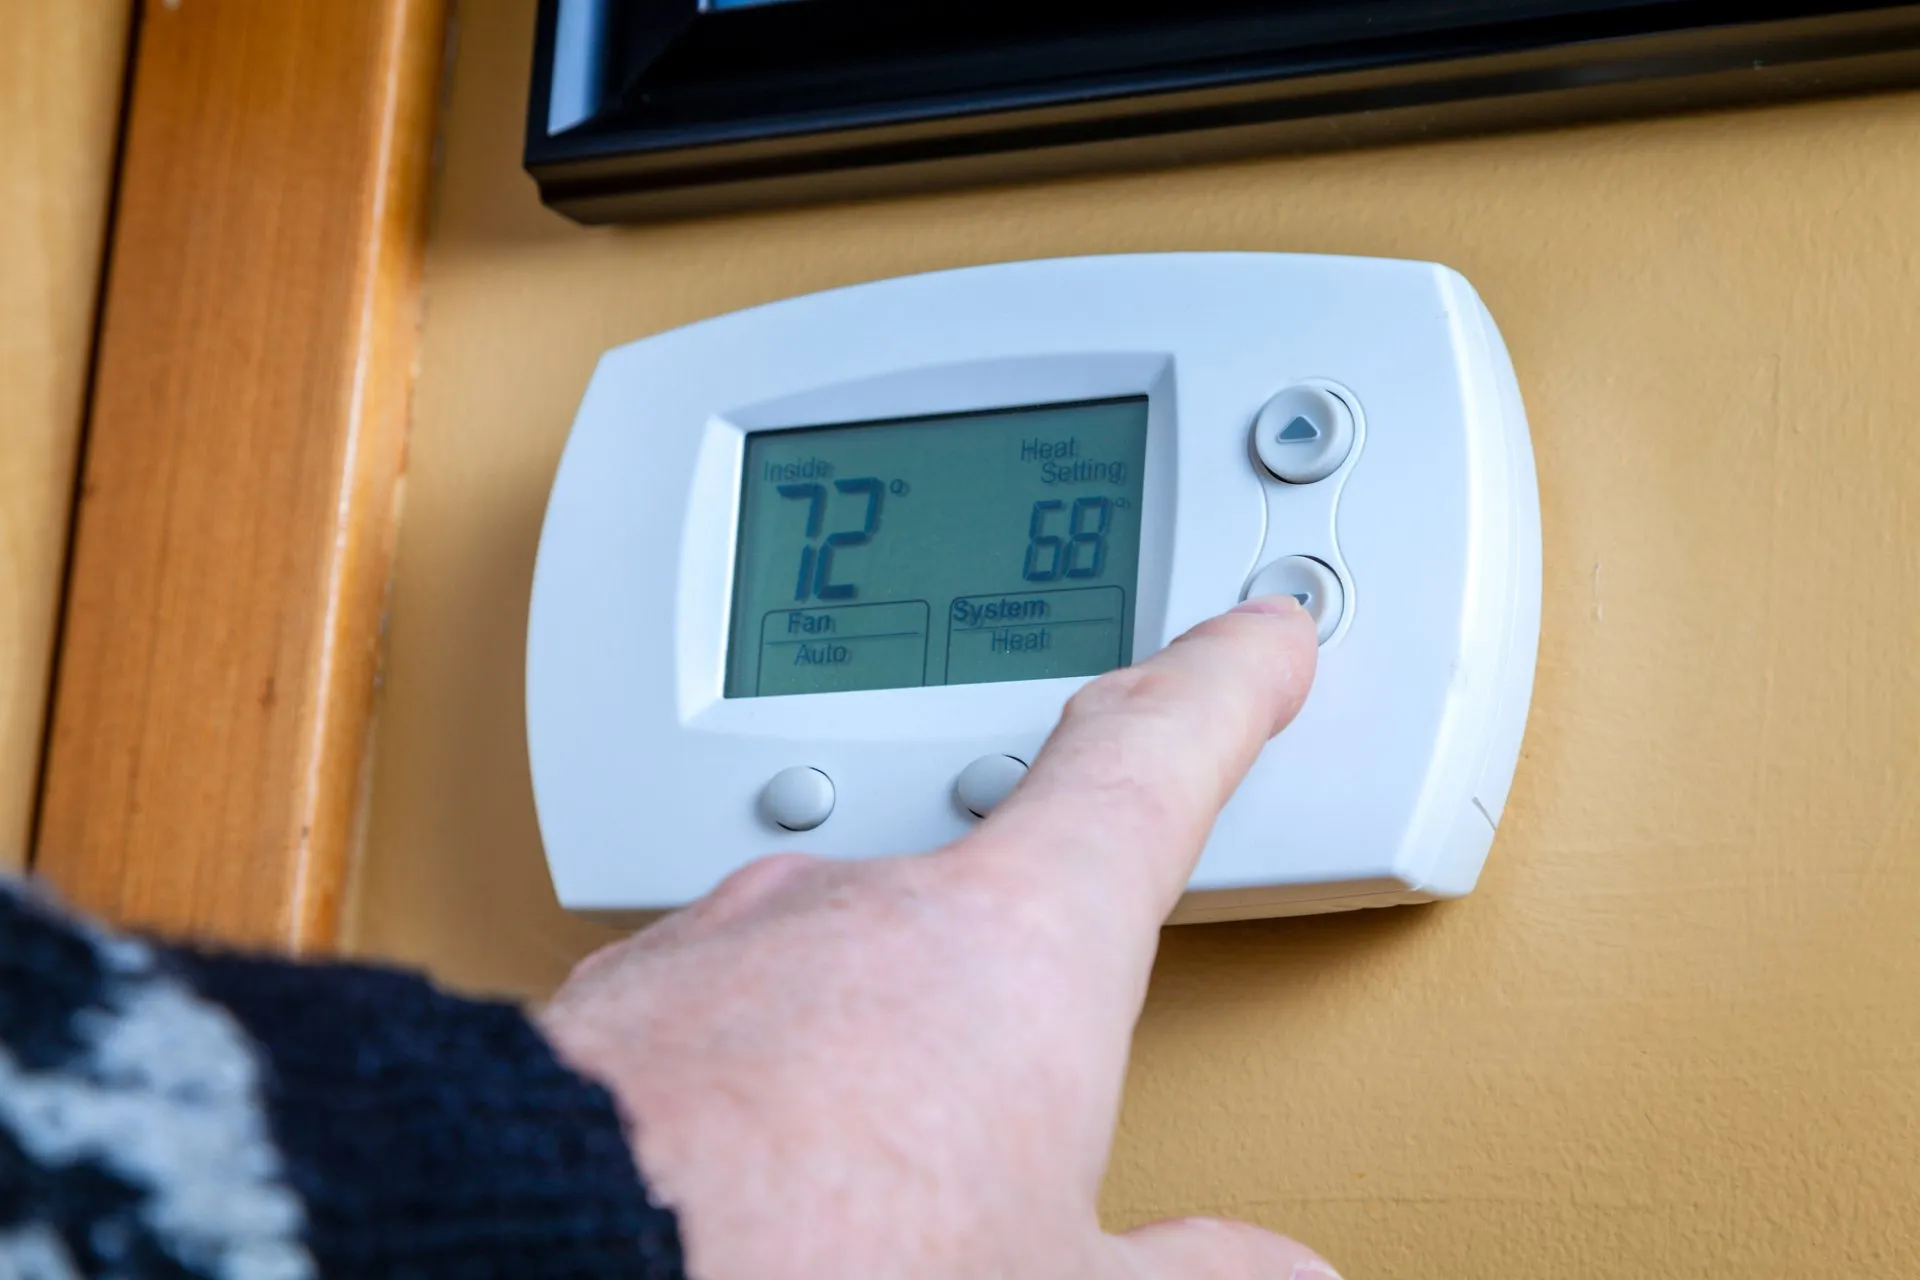 Honeywell Thermostat Reset